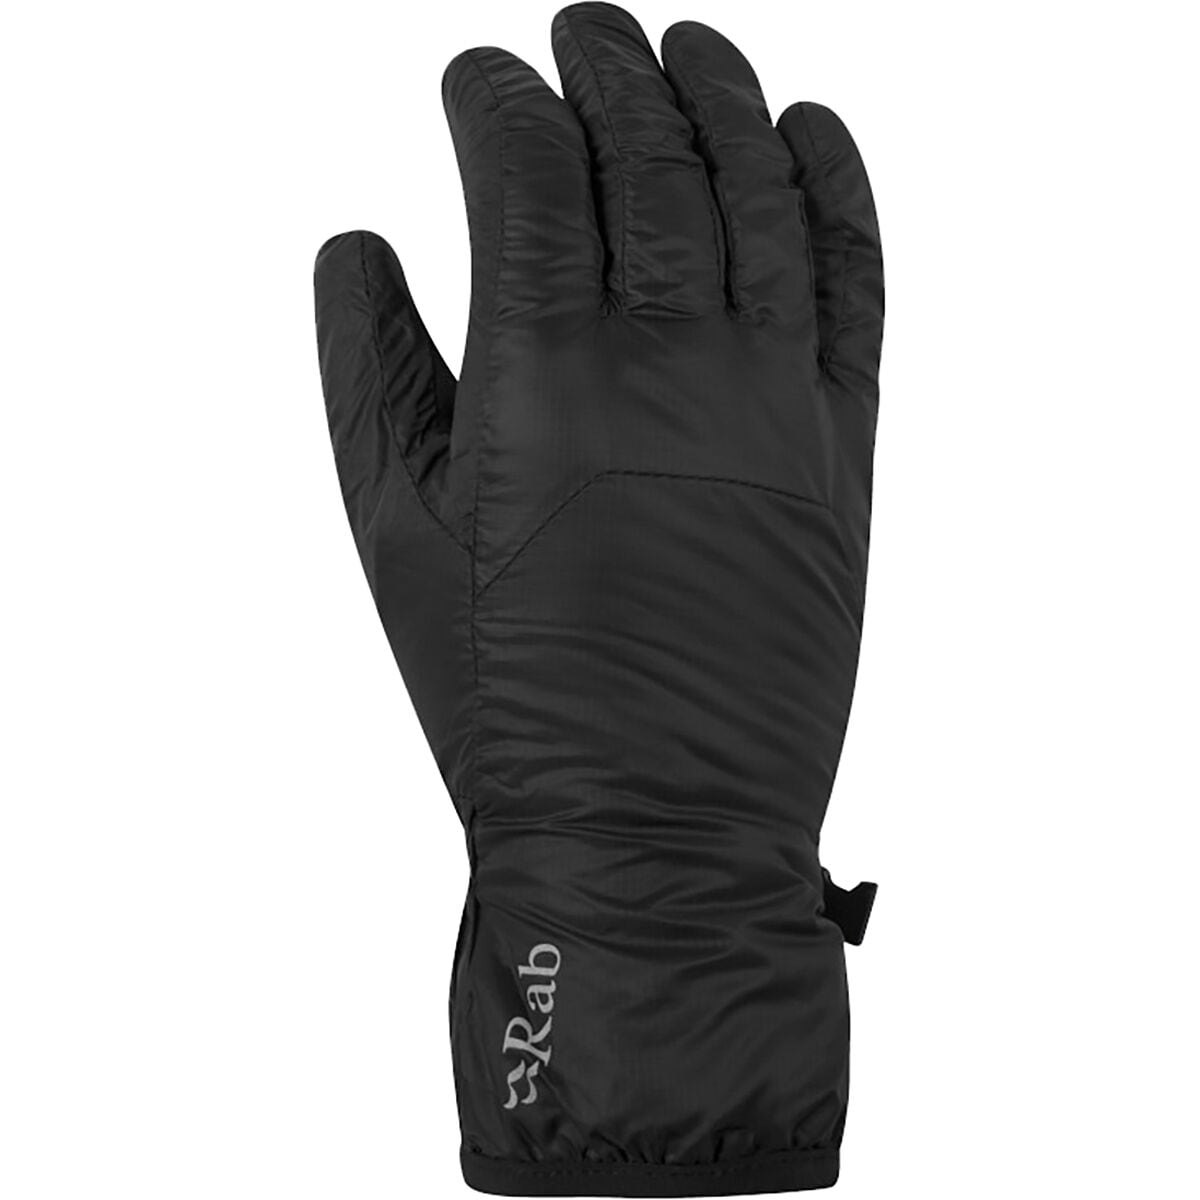 Rab Xenon Glove - Men's